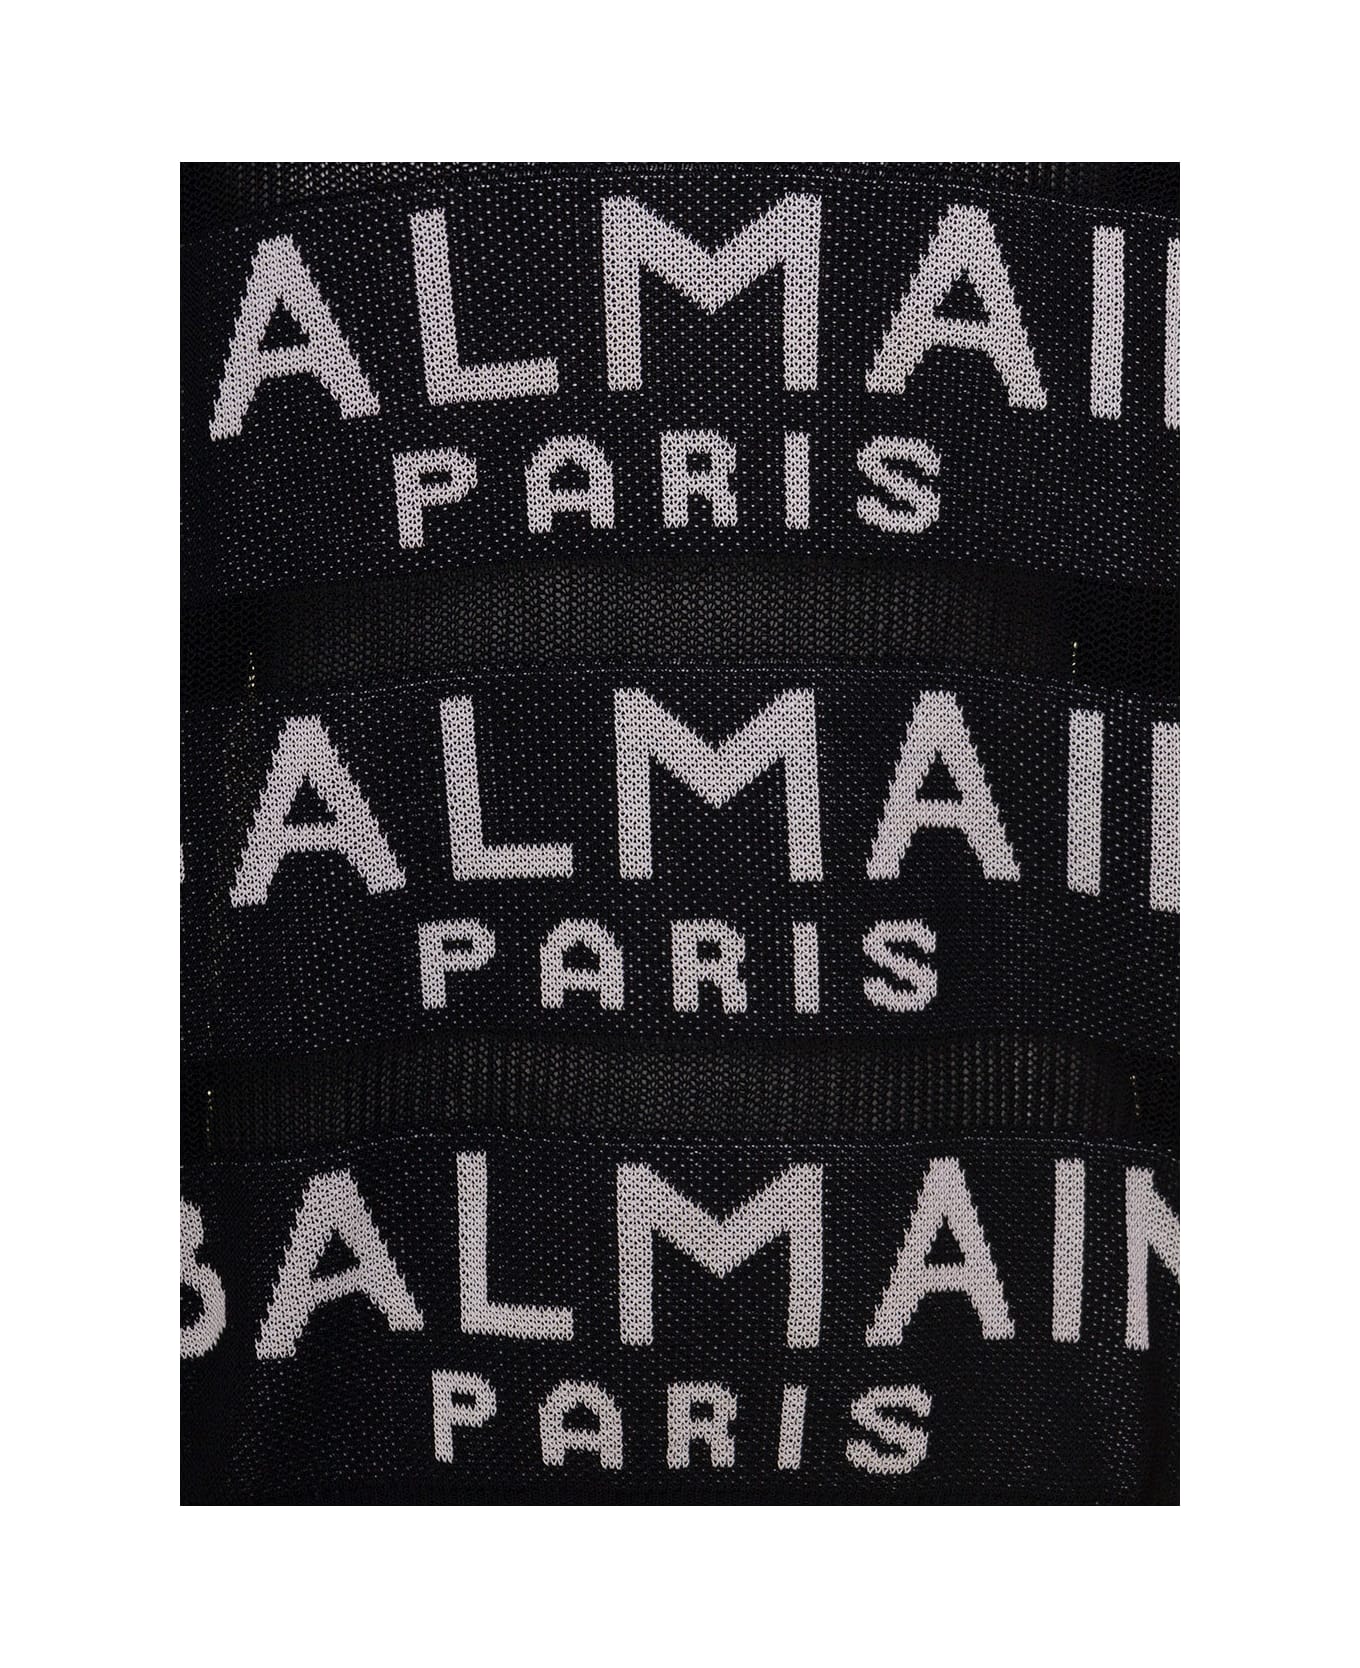 Balmain Black Knit Jumper With All-over Logo In Cotton Blend Man Balmain - Black